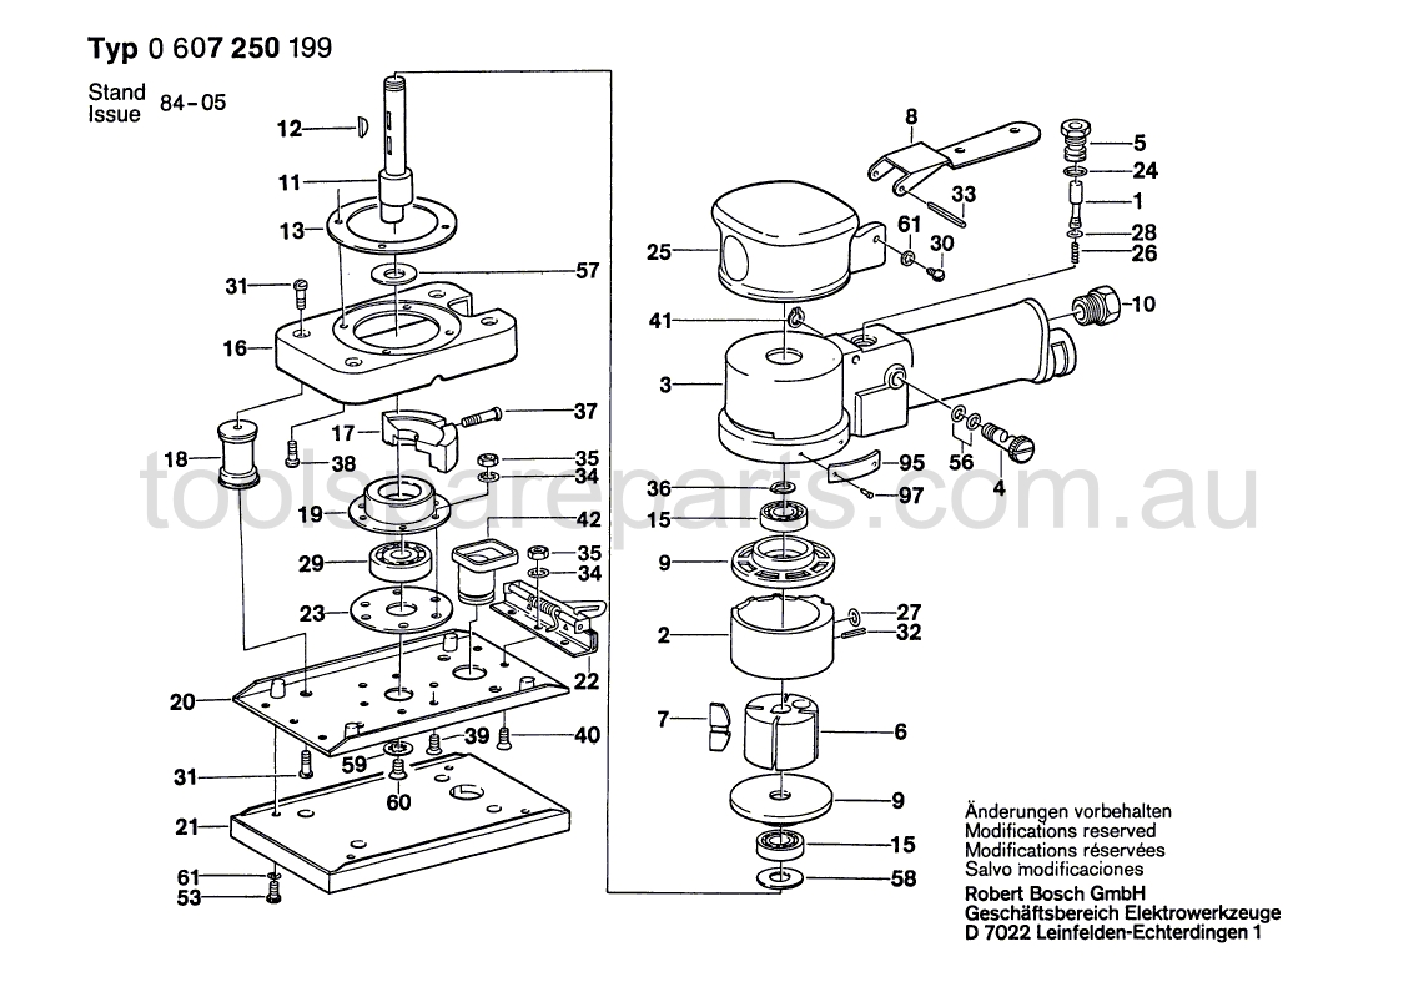 Bosch 50 WATT-SERIE 0607250199  Diagram 1